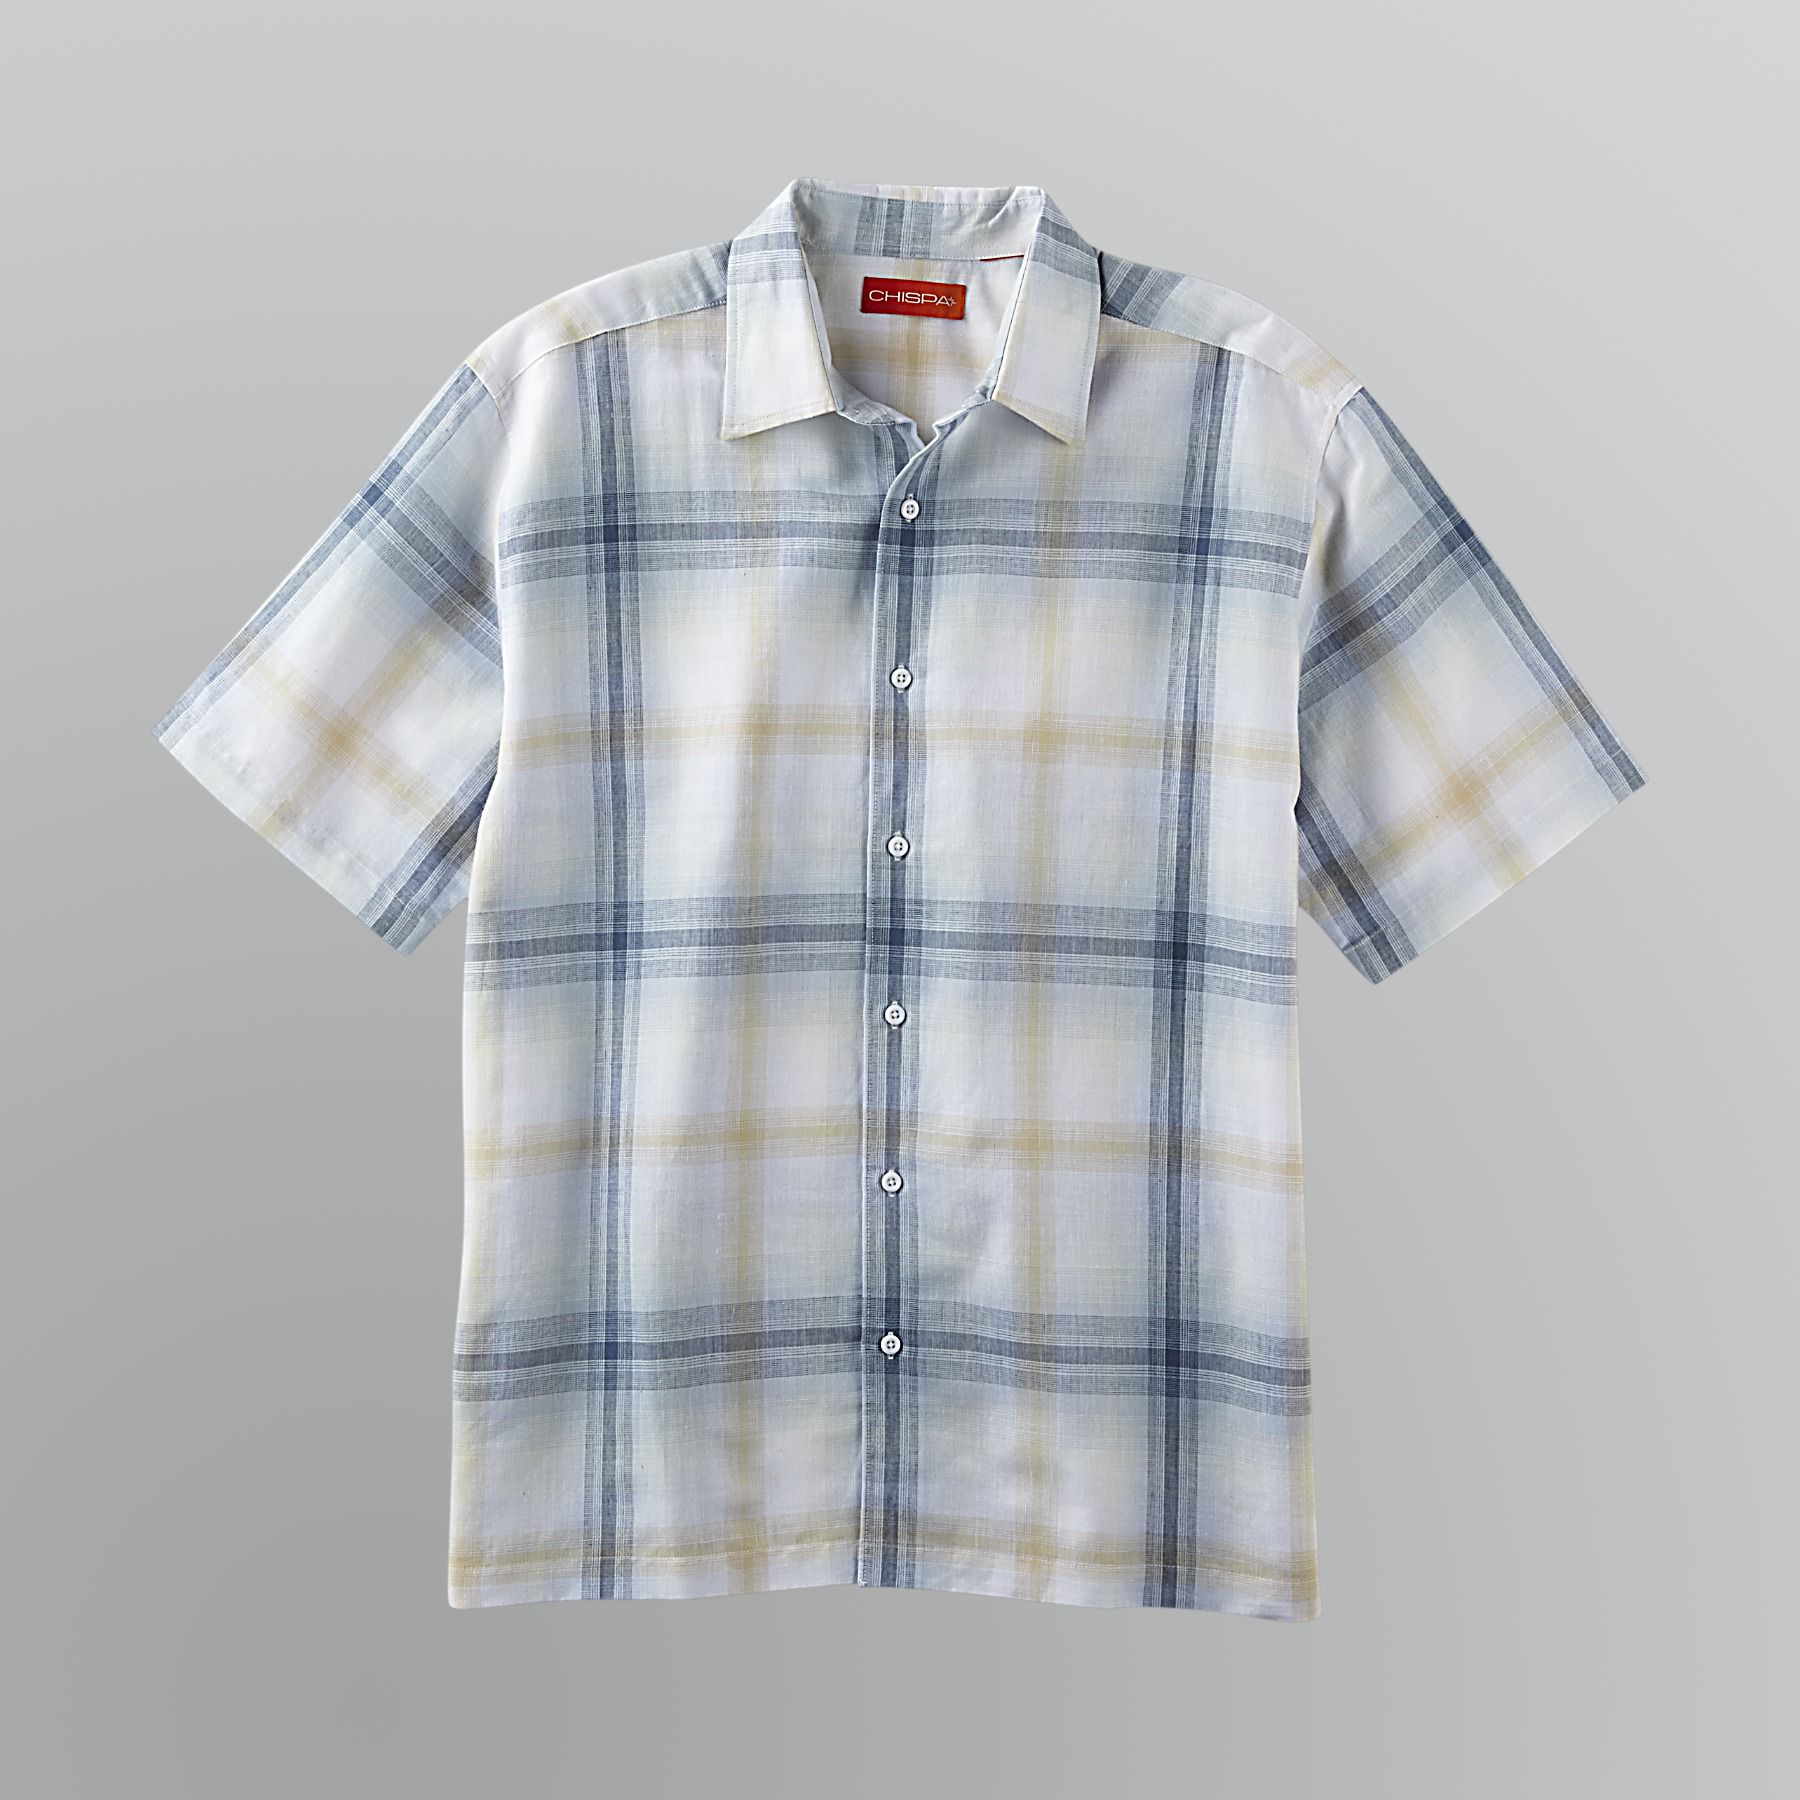 Chispa Men's Button-Up Plaid Shirt